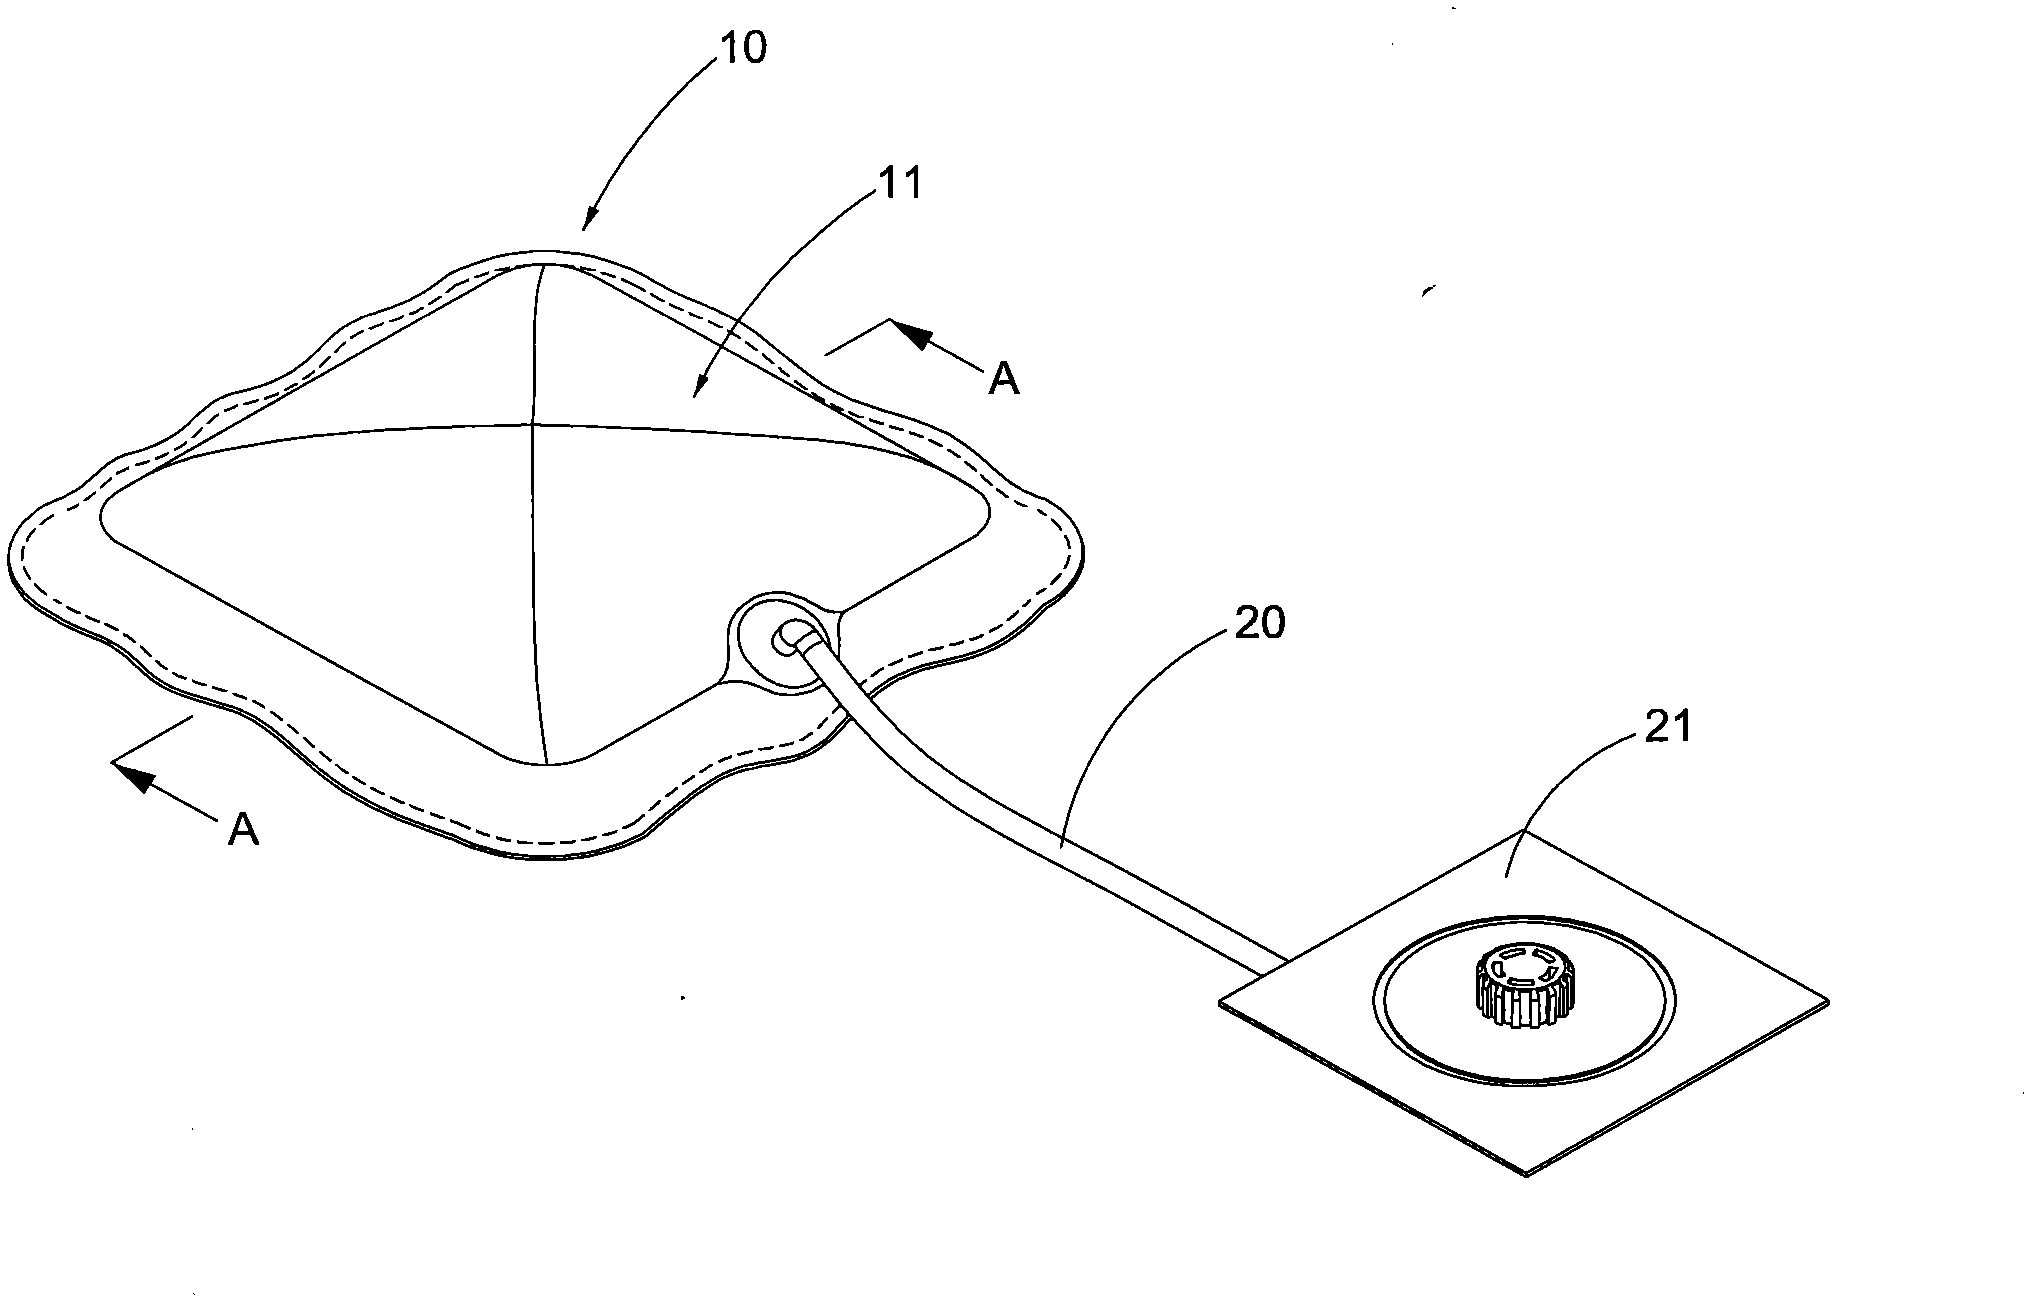 Self-aeration bumper pad